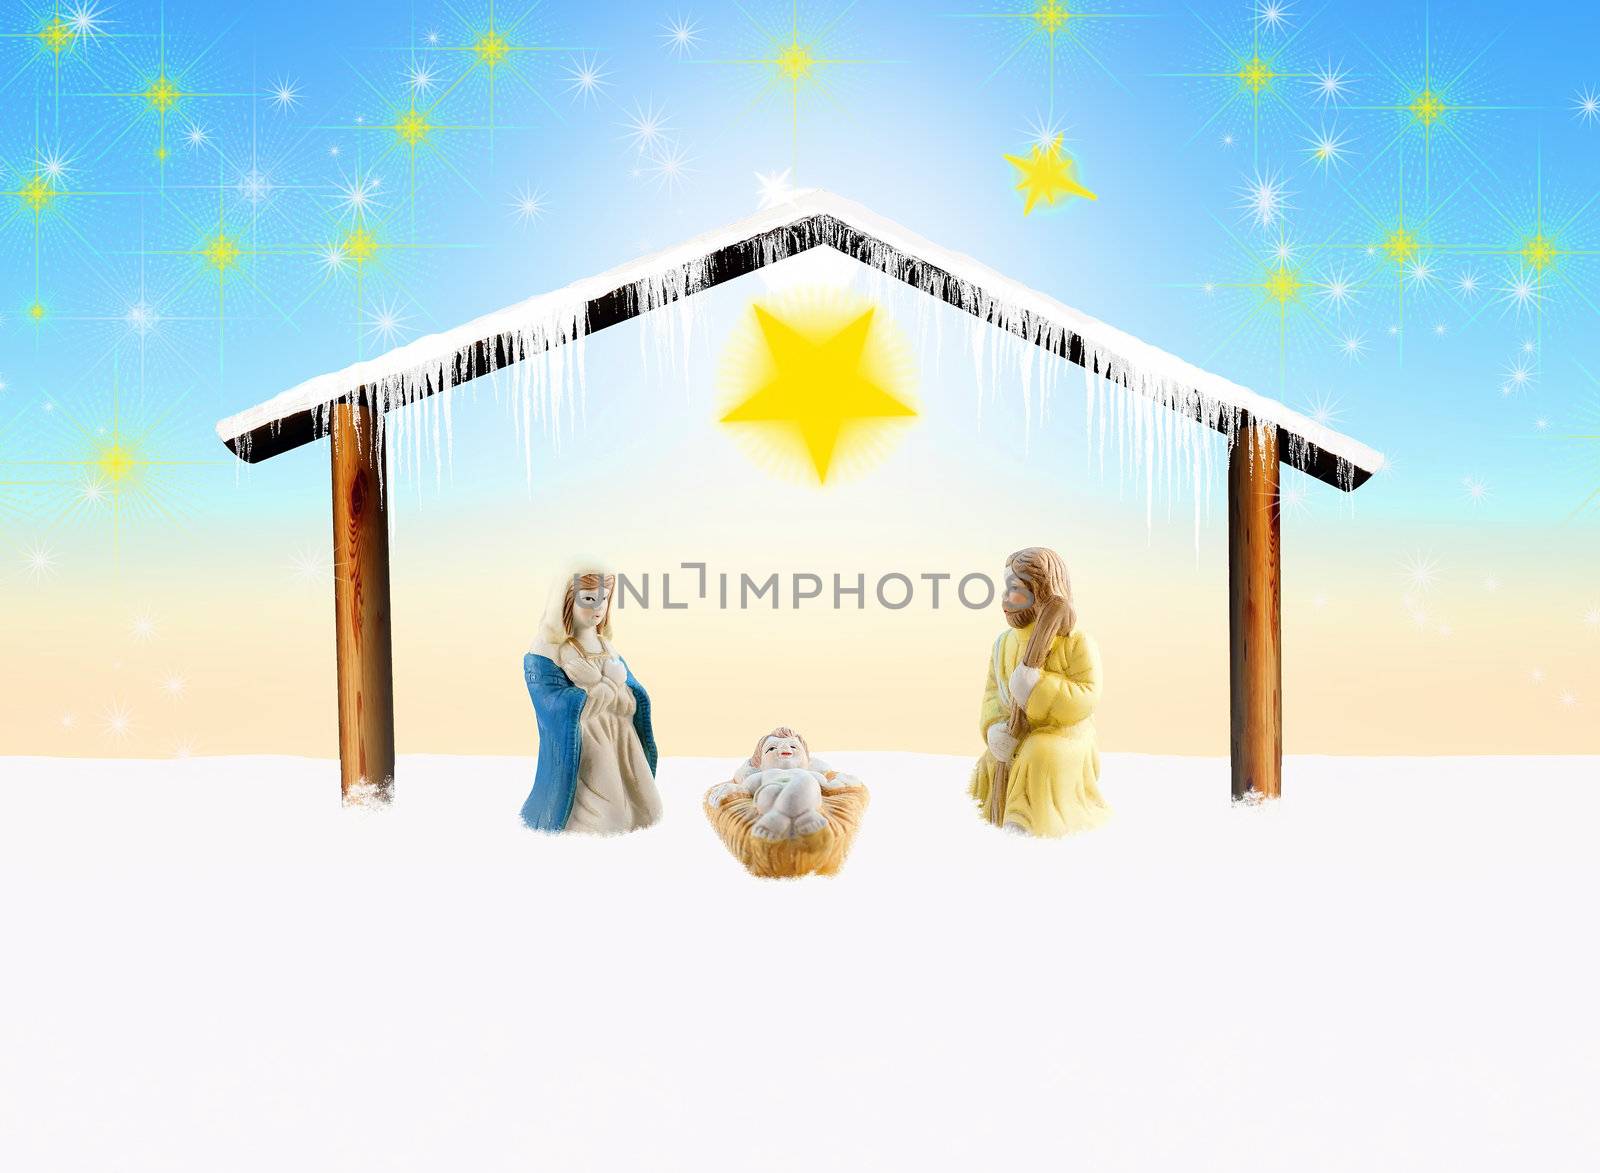 nativity scene by gufoto